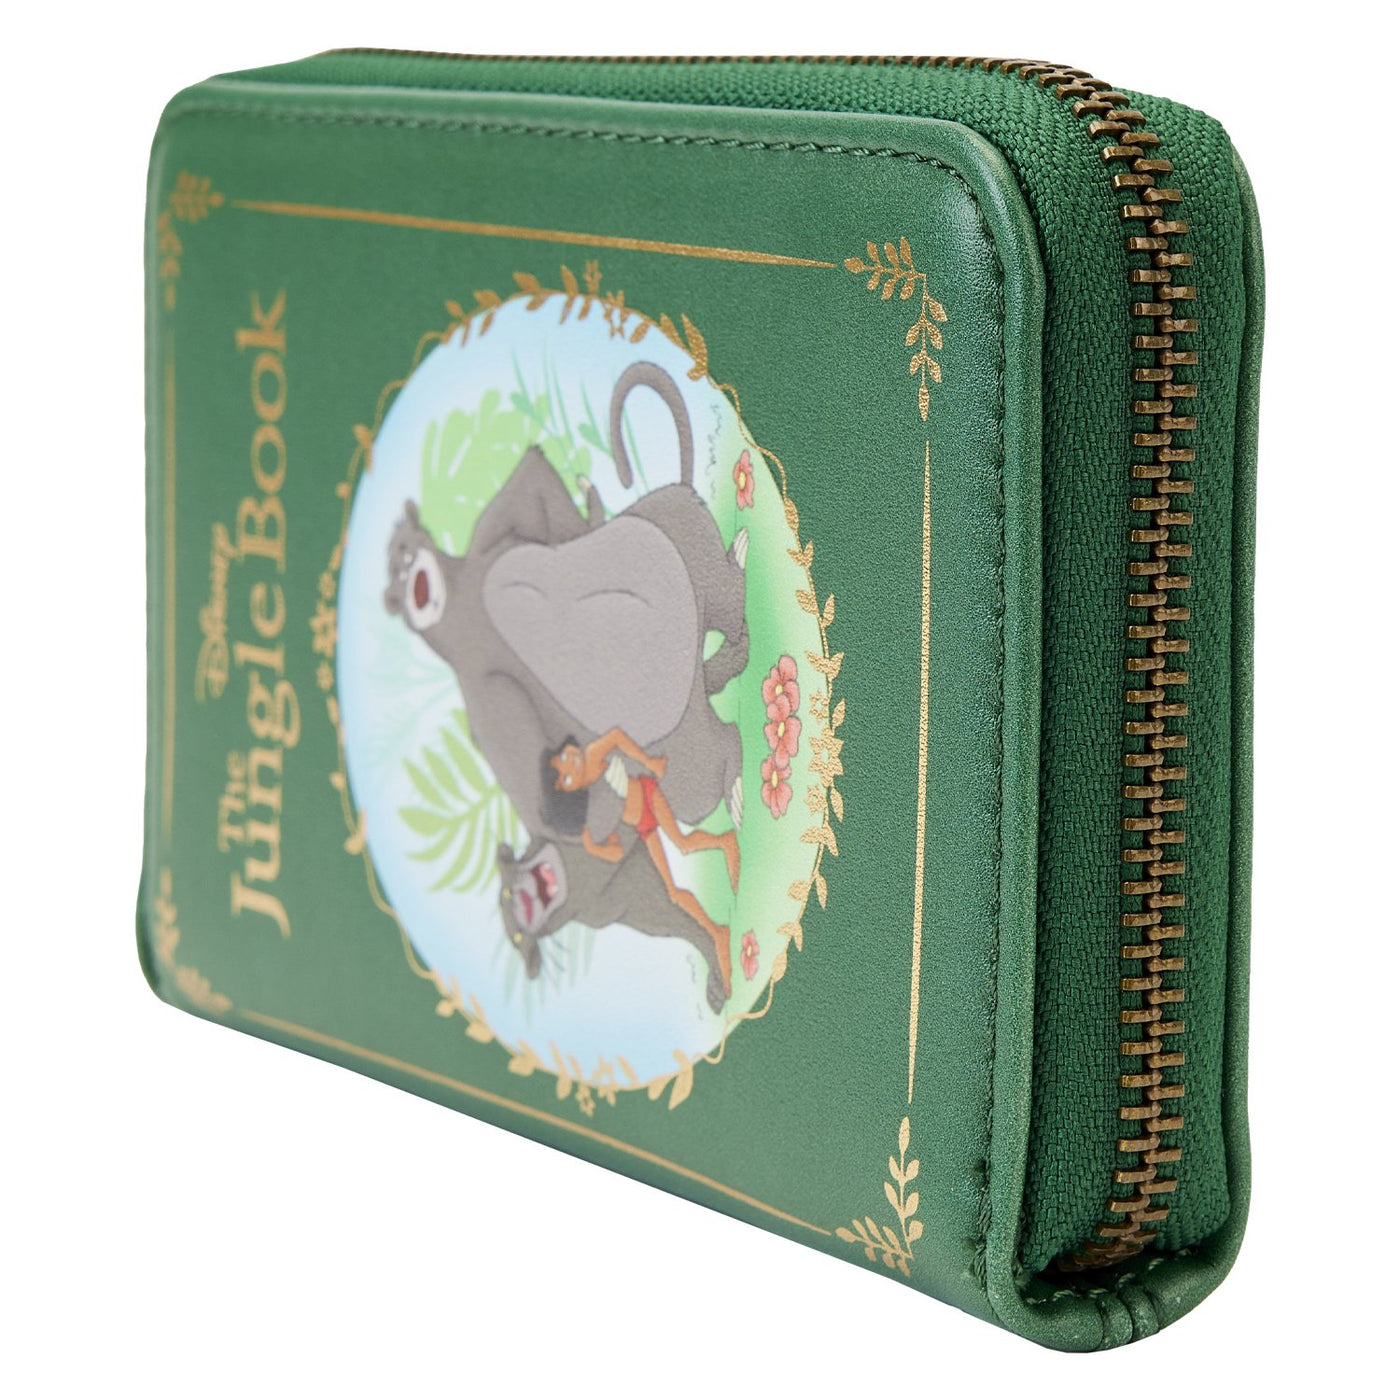 Loungefly Disney Jungle Book Zip-Around Wallet - Side View